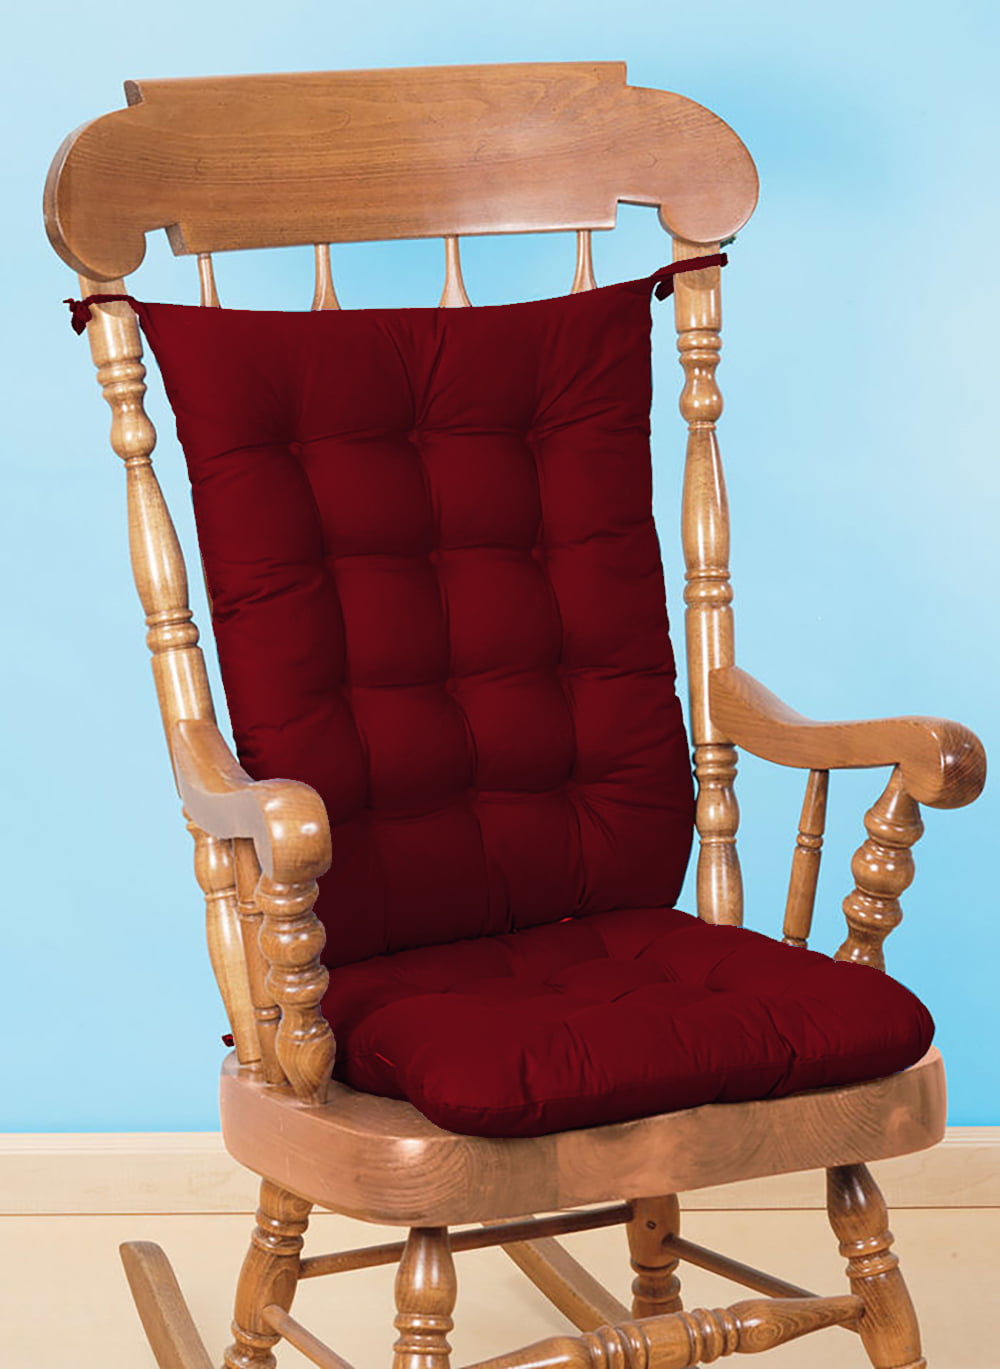 Rocking Chair Cushions burgandy - Walmart.com - Walmart.com